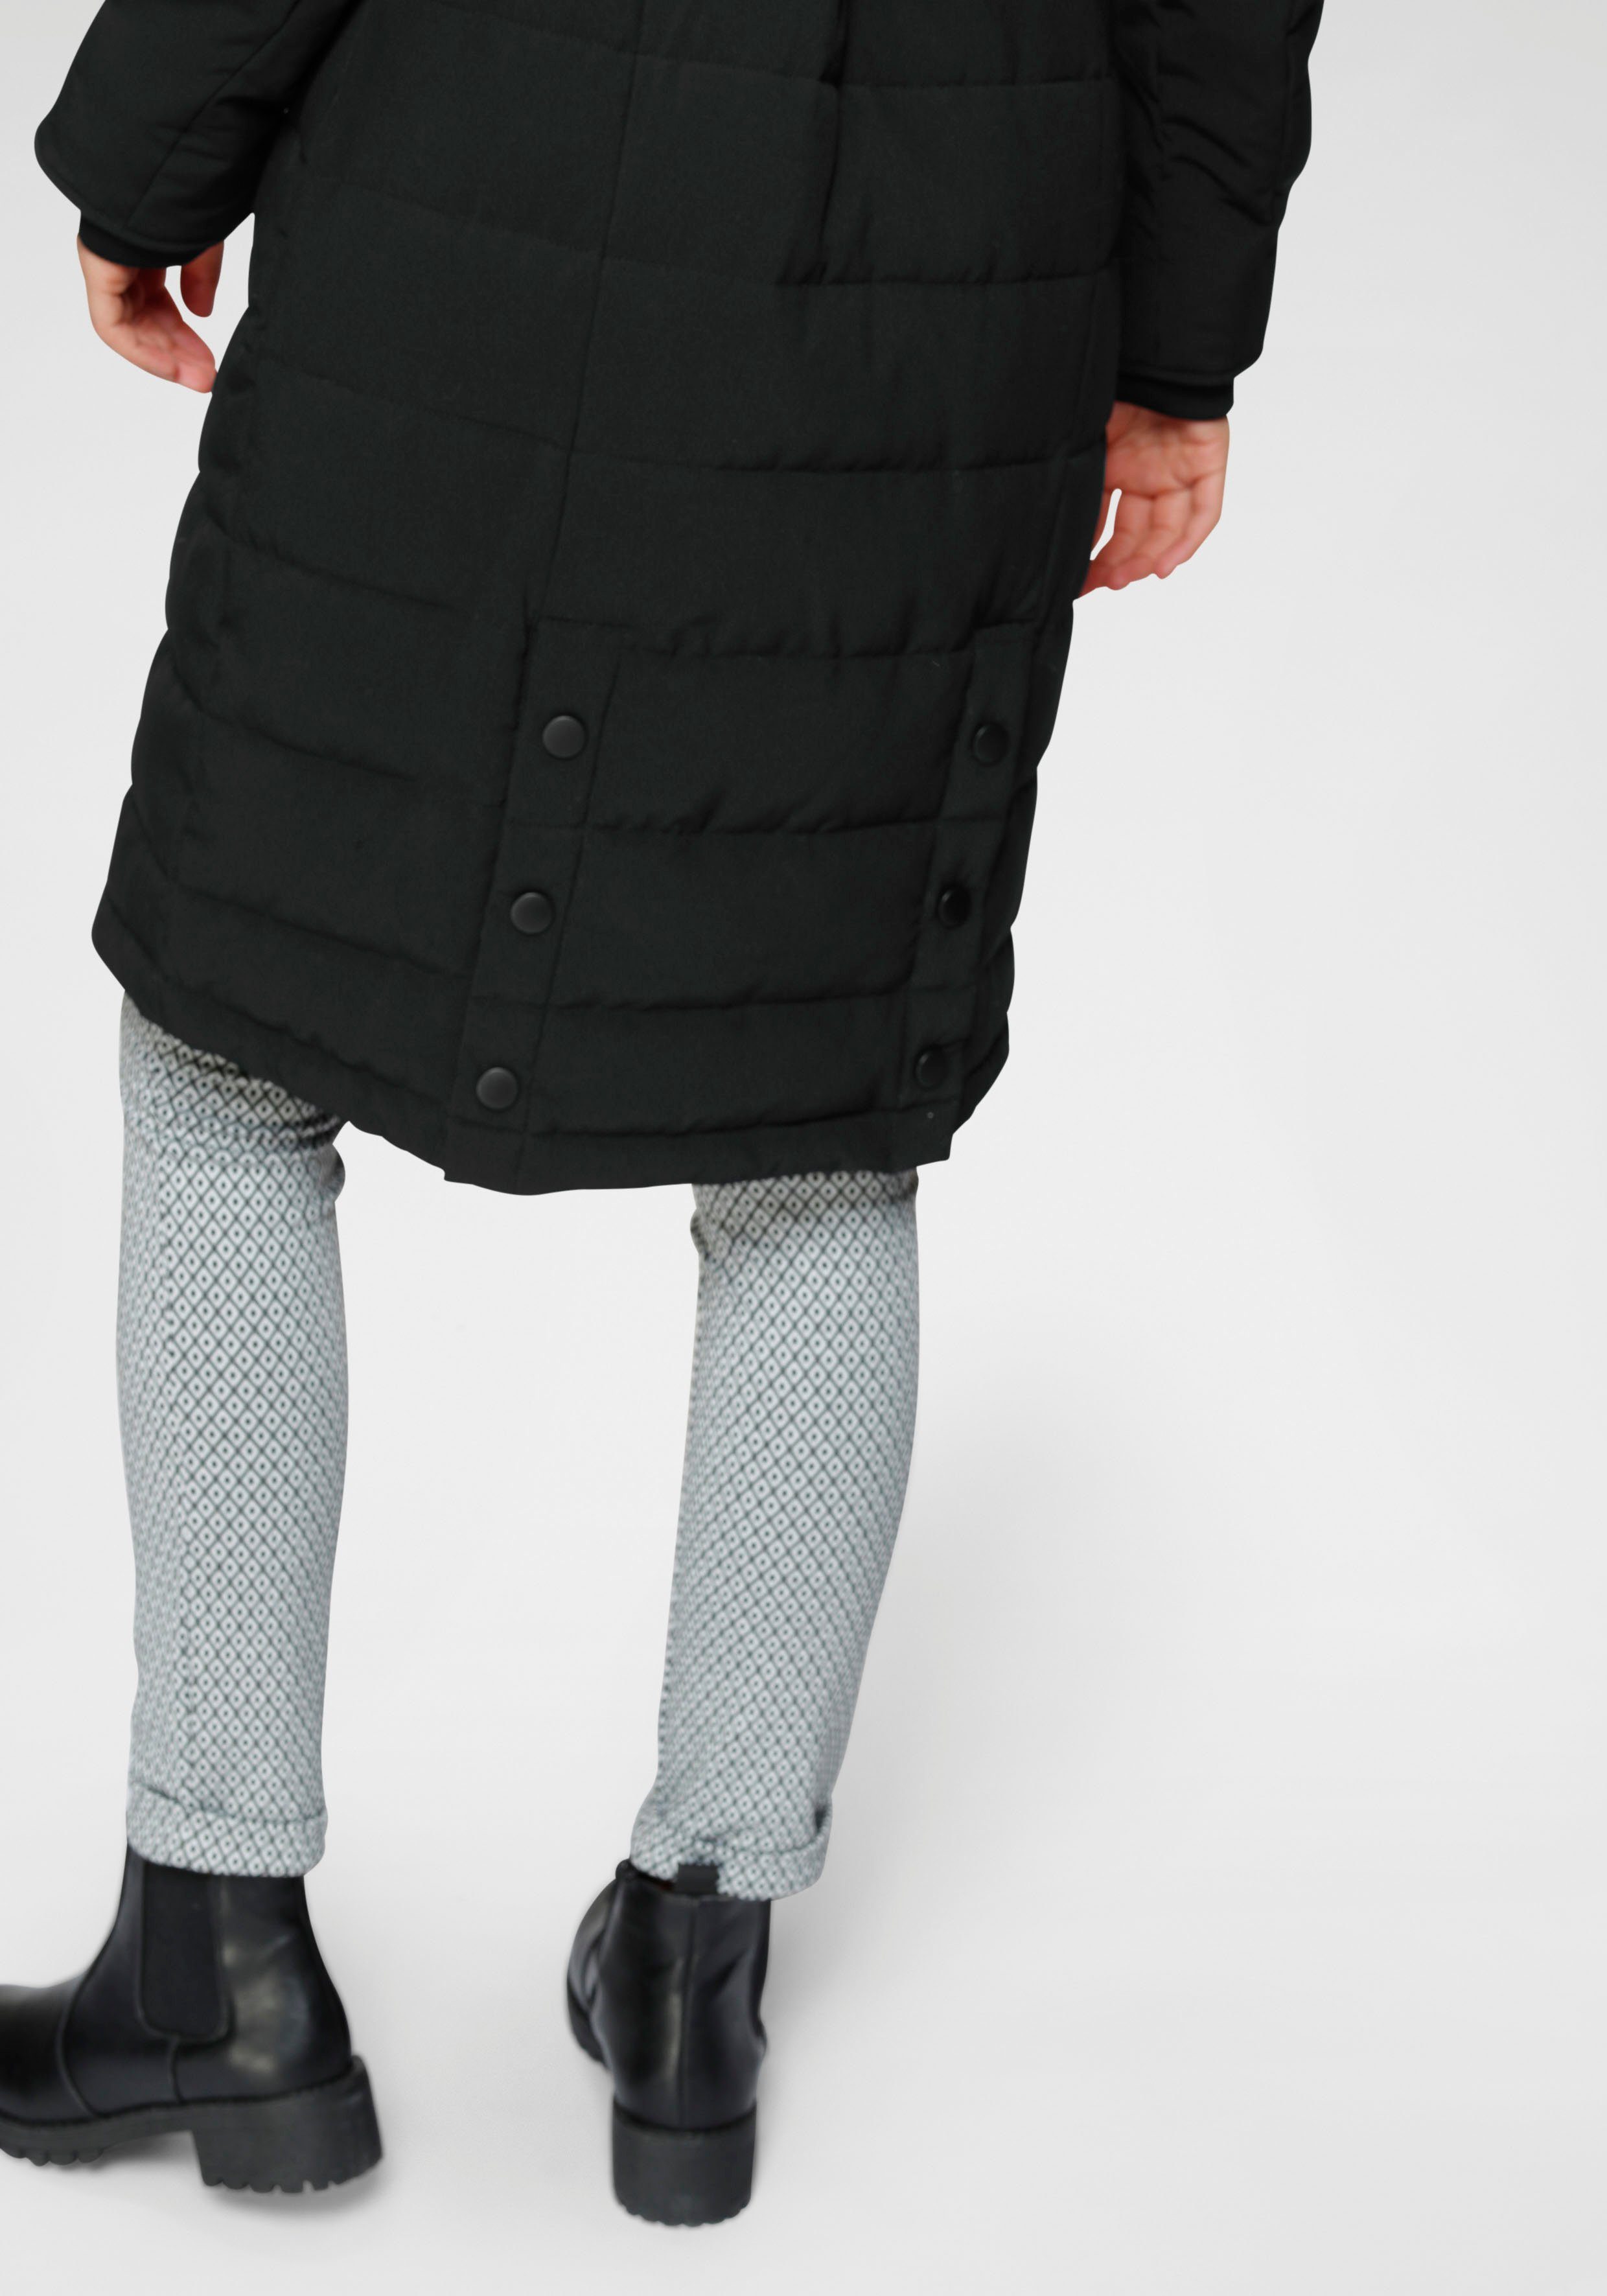 ALPENBLITZ Steppmantel Markenprägung nachhaltigem Kuschel-Kapuze aus long abnehmbarer Gürtel Mantel mit Material) Oslo (Jacke black auf & dem